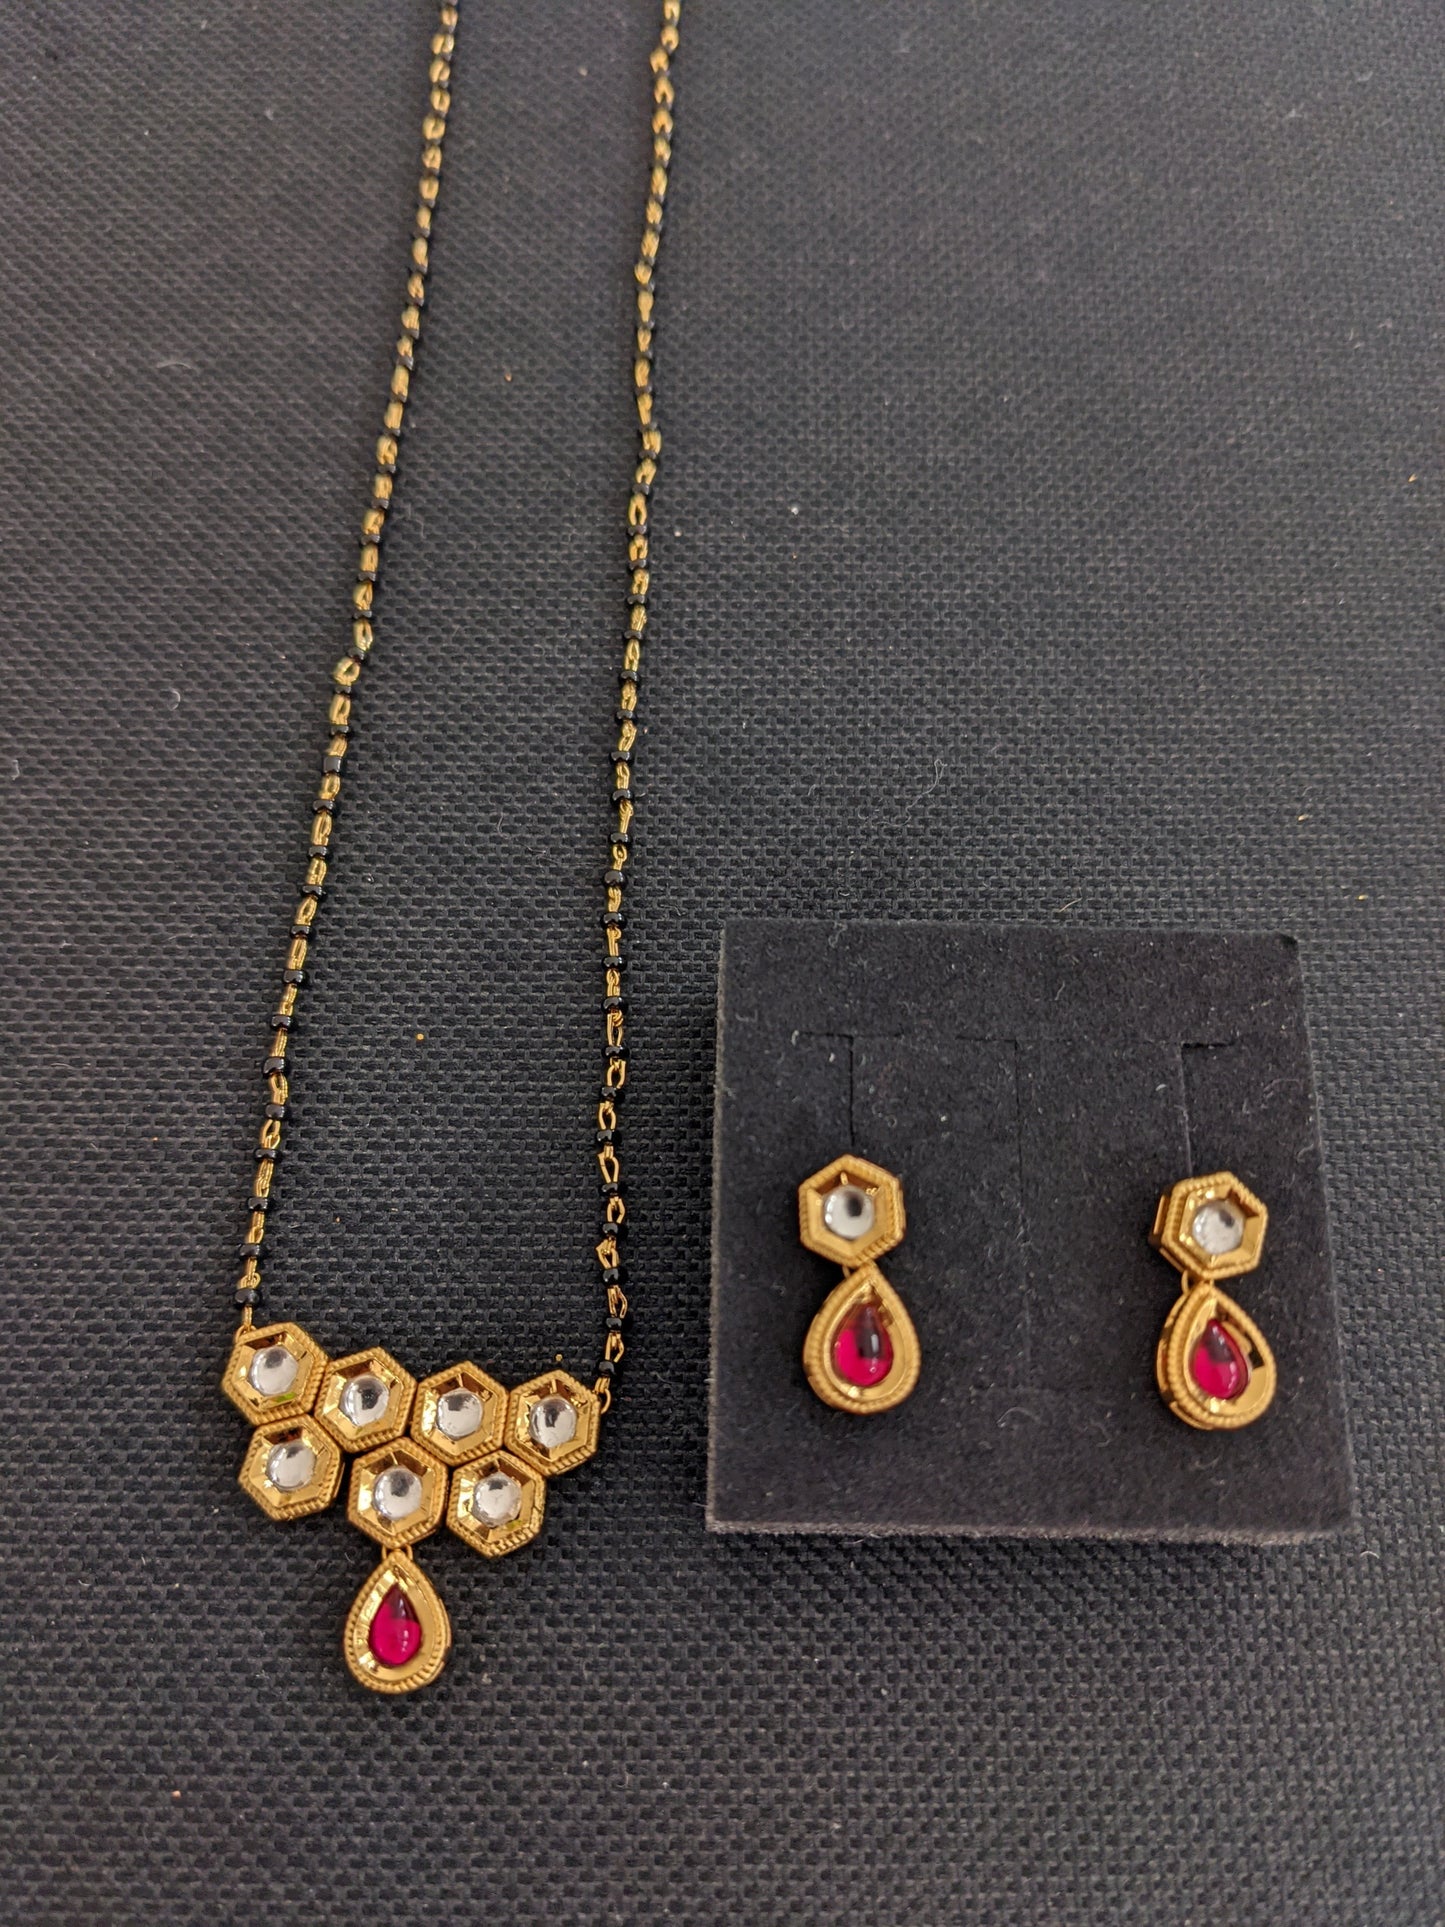 Mangalsutra - Kundan Pendant and Earrings set - Single strand chain - Design 1